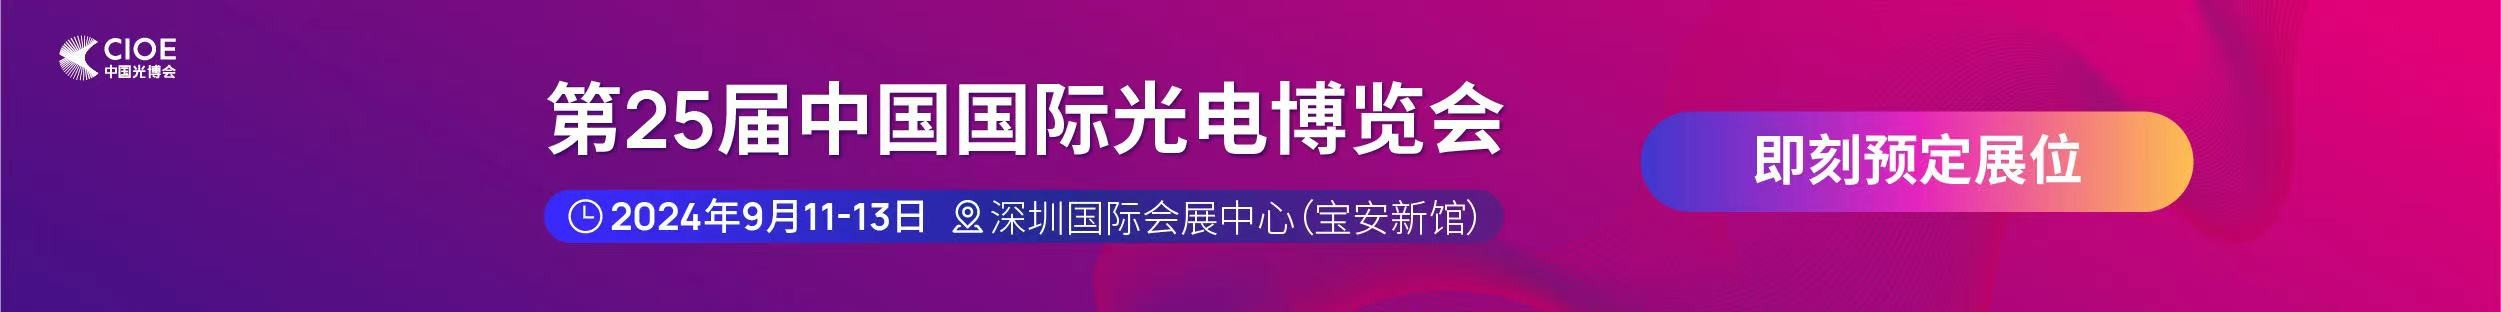 bet356体育在线亚洲版下载公司受邀参展第25届中国国际光电博览会